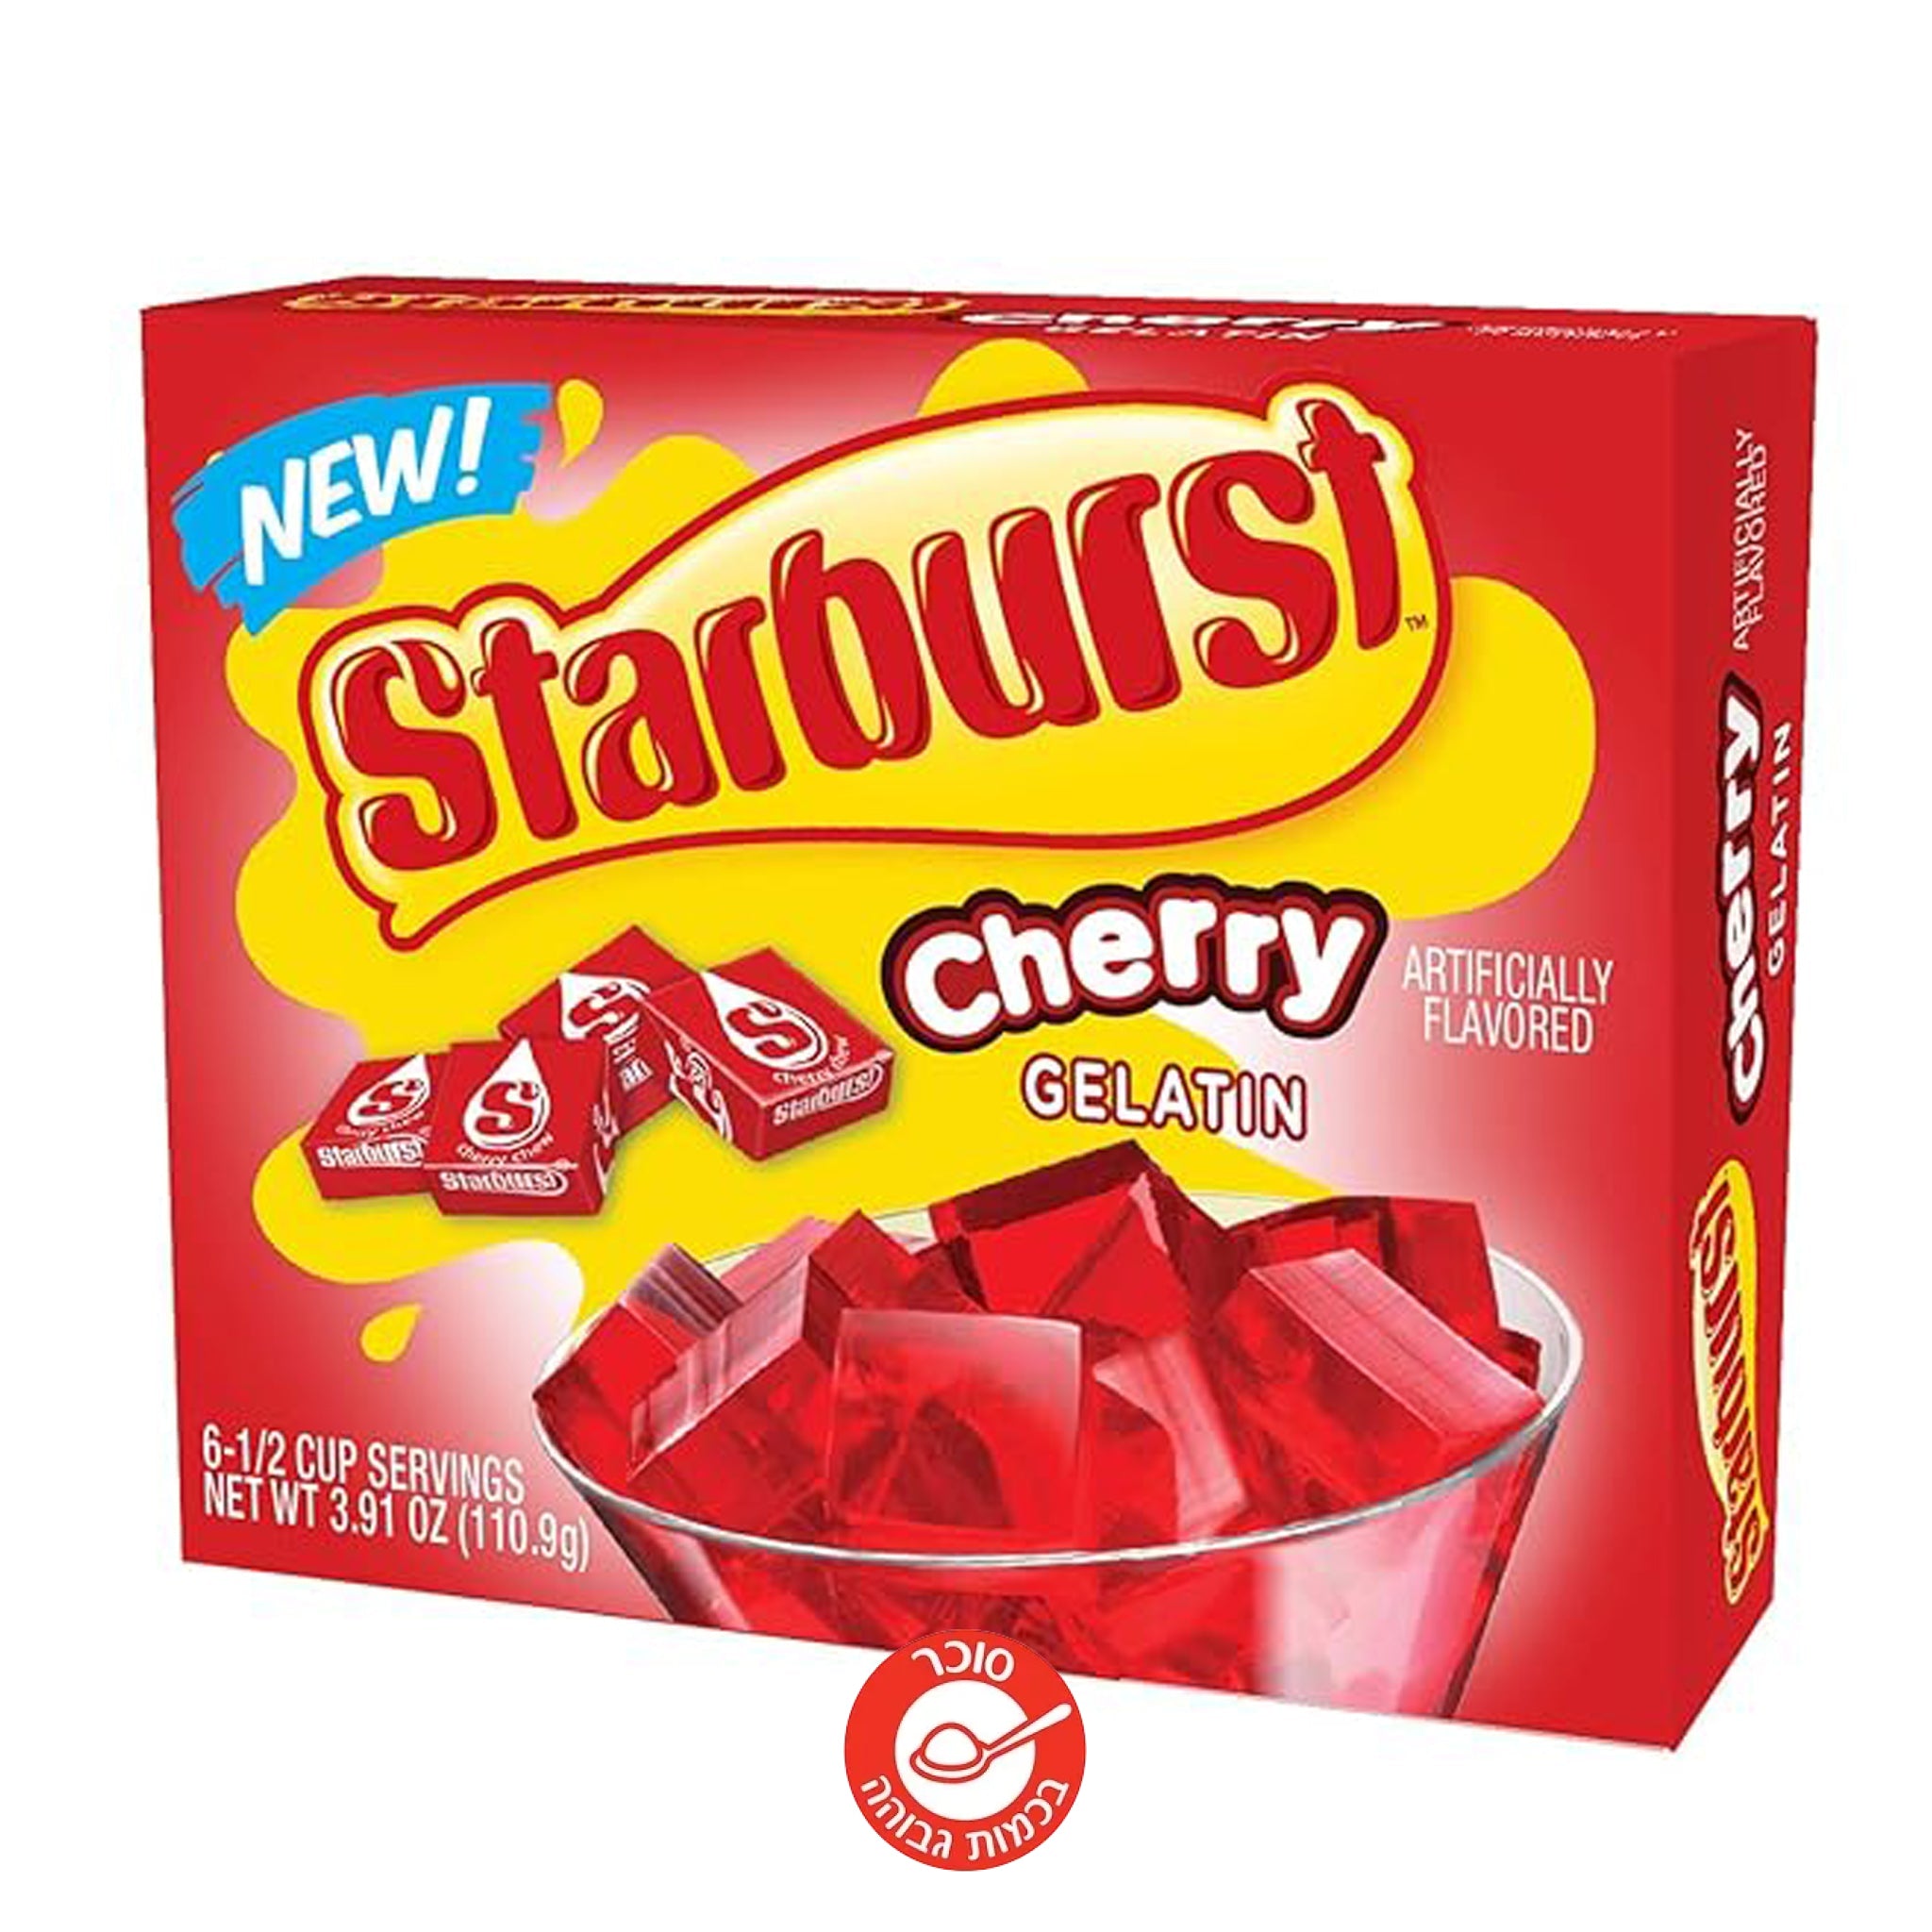 Starburst Cherry Jello סטארבסט ג'לי להכנה בטעם דובדבן